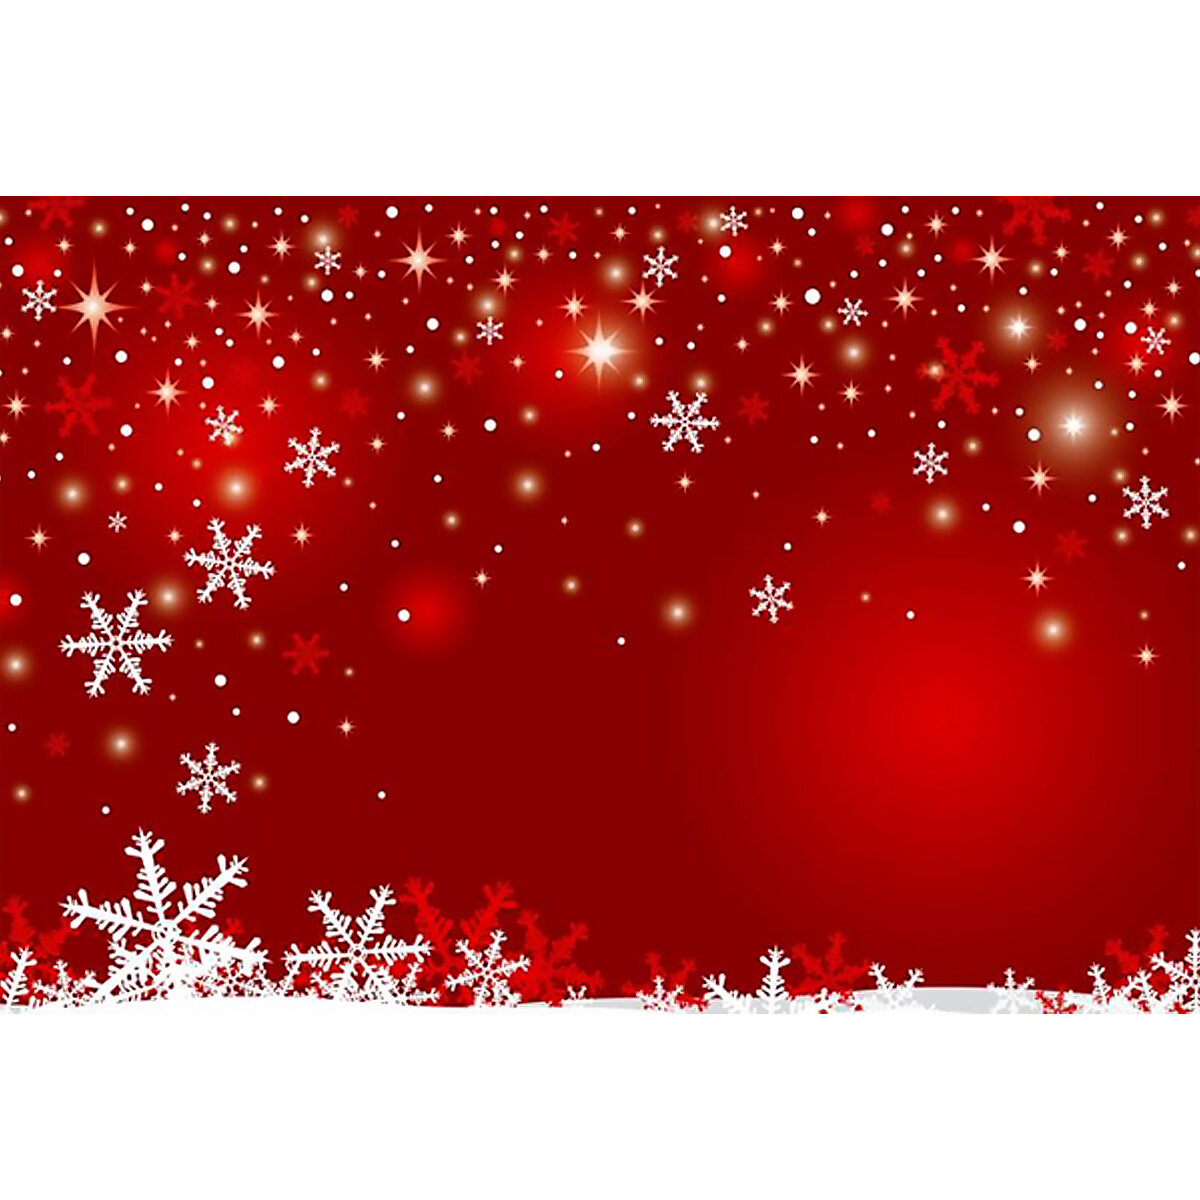 Fotografie Achtergrondgeluid Doek Vinyl Rode Sneeuwvlok Glanzende Ster Patroon Achtergrond Kerst Nie